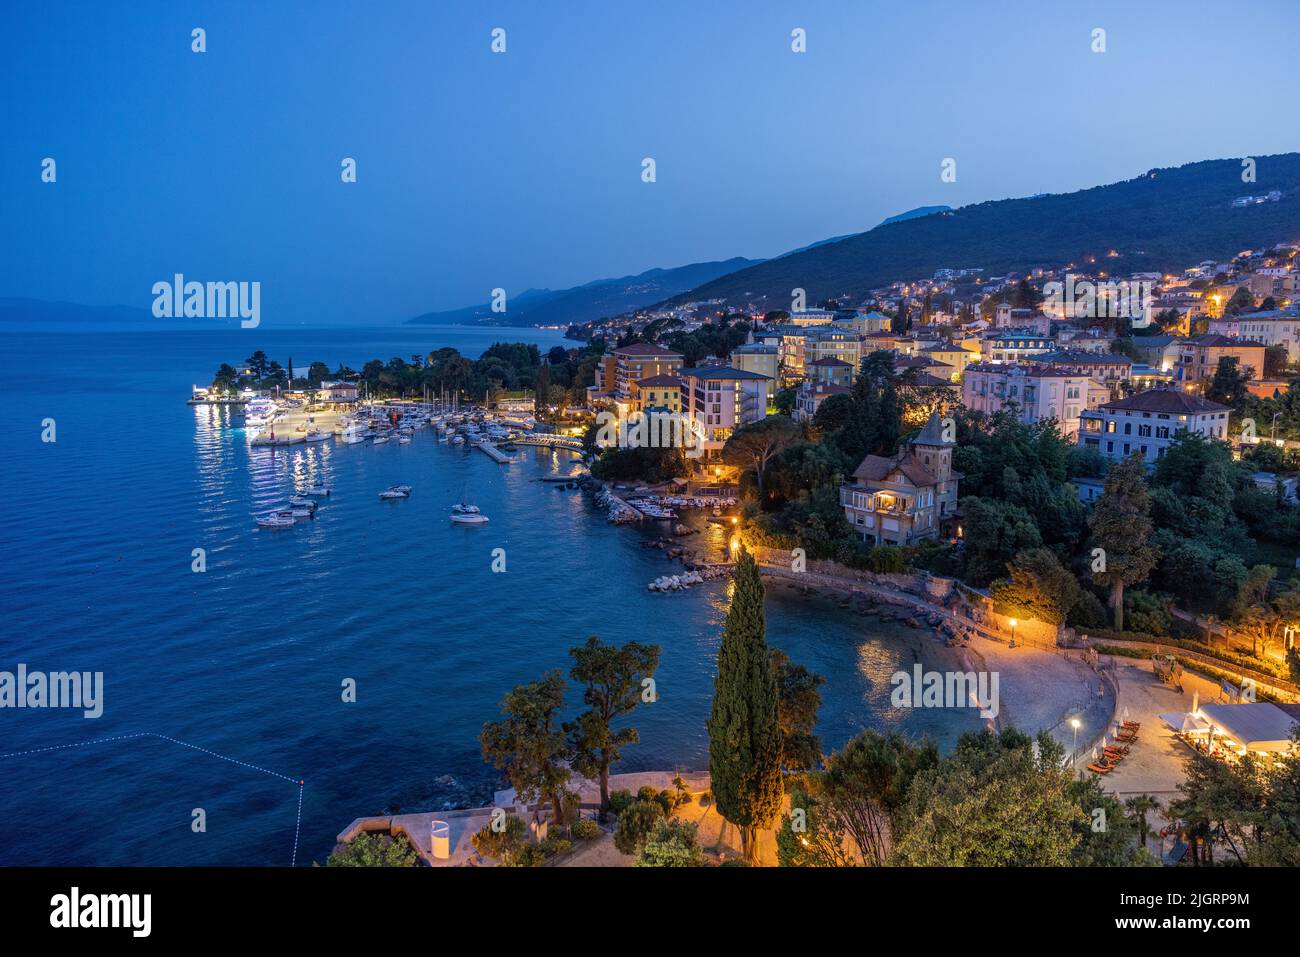 Evening view of Opatija resort in Istrian peninsula of Croatia Stock Photo